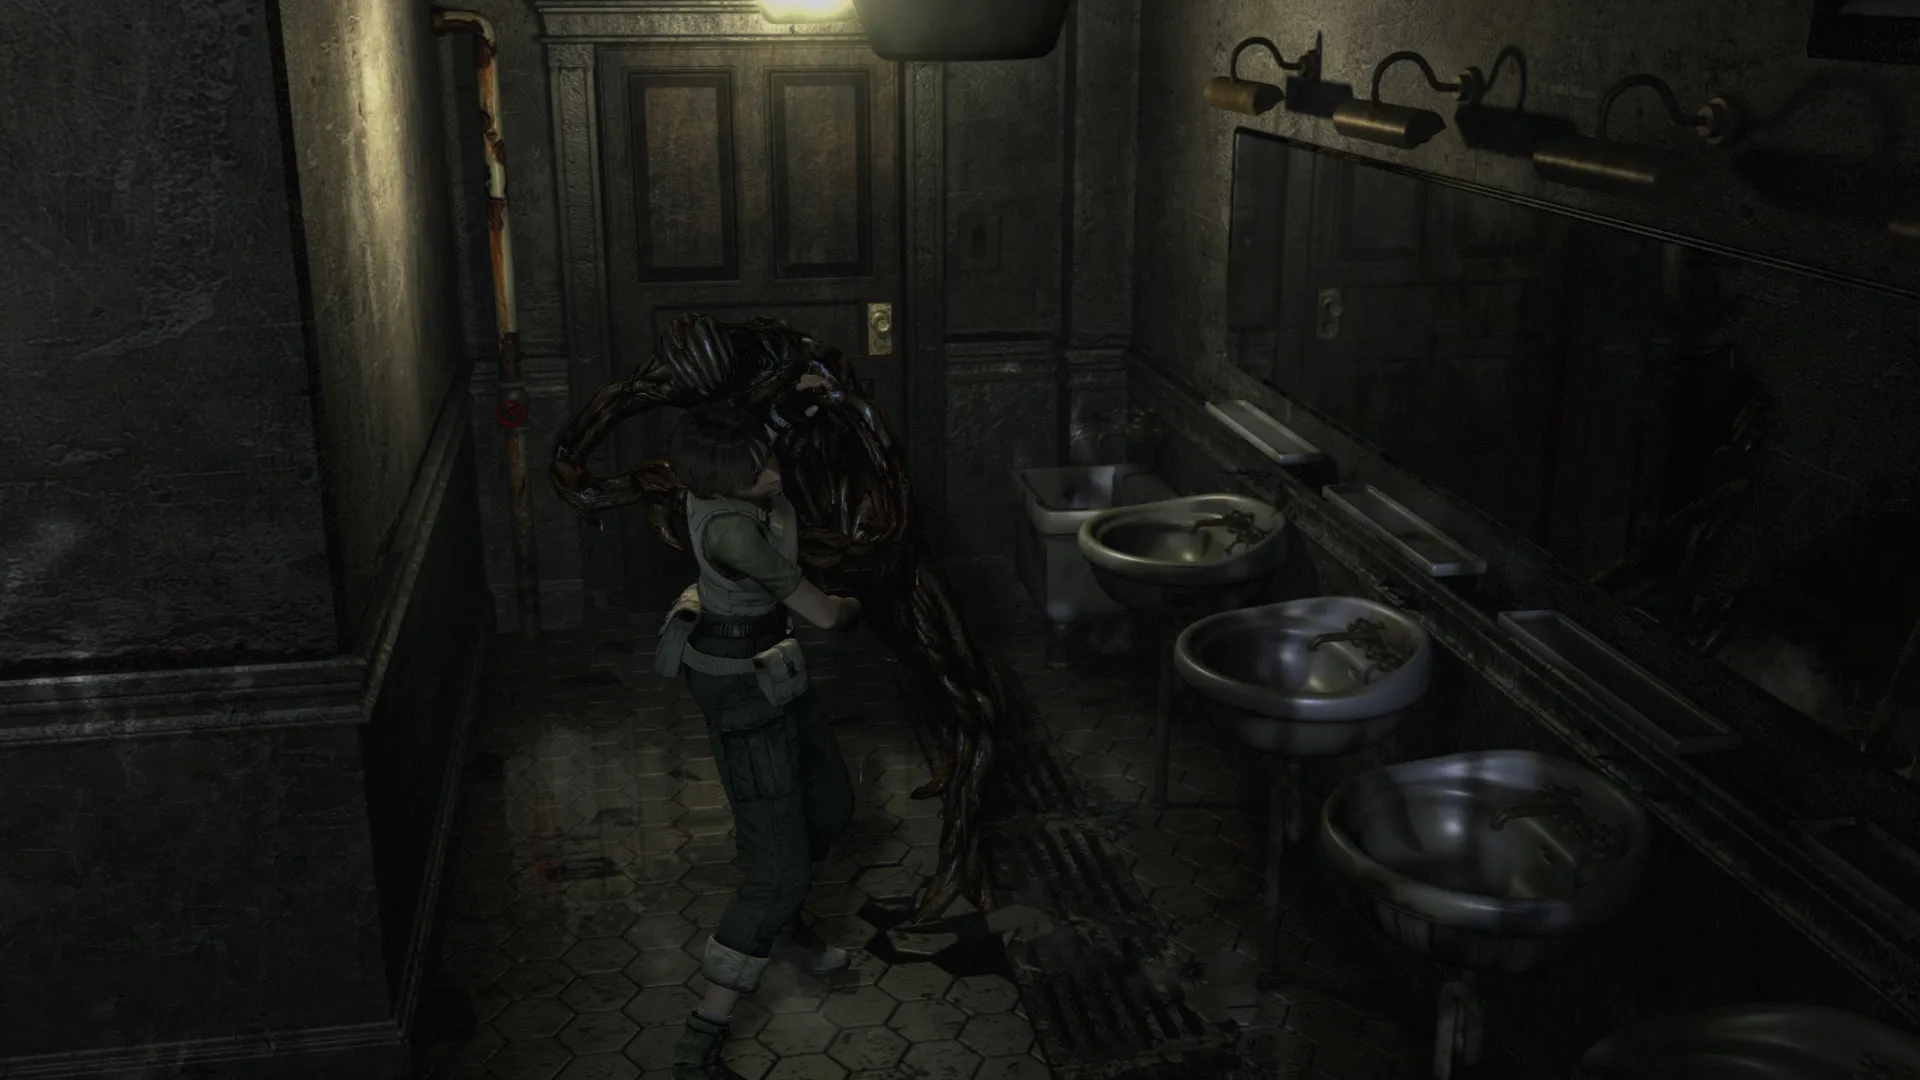 Resident Evil Remake Trailer HD PS4 PS3 - Resident Evil Remake Gameplay 